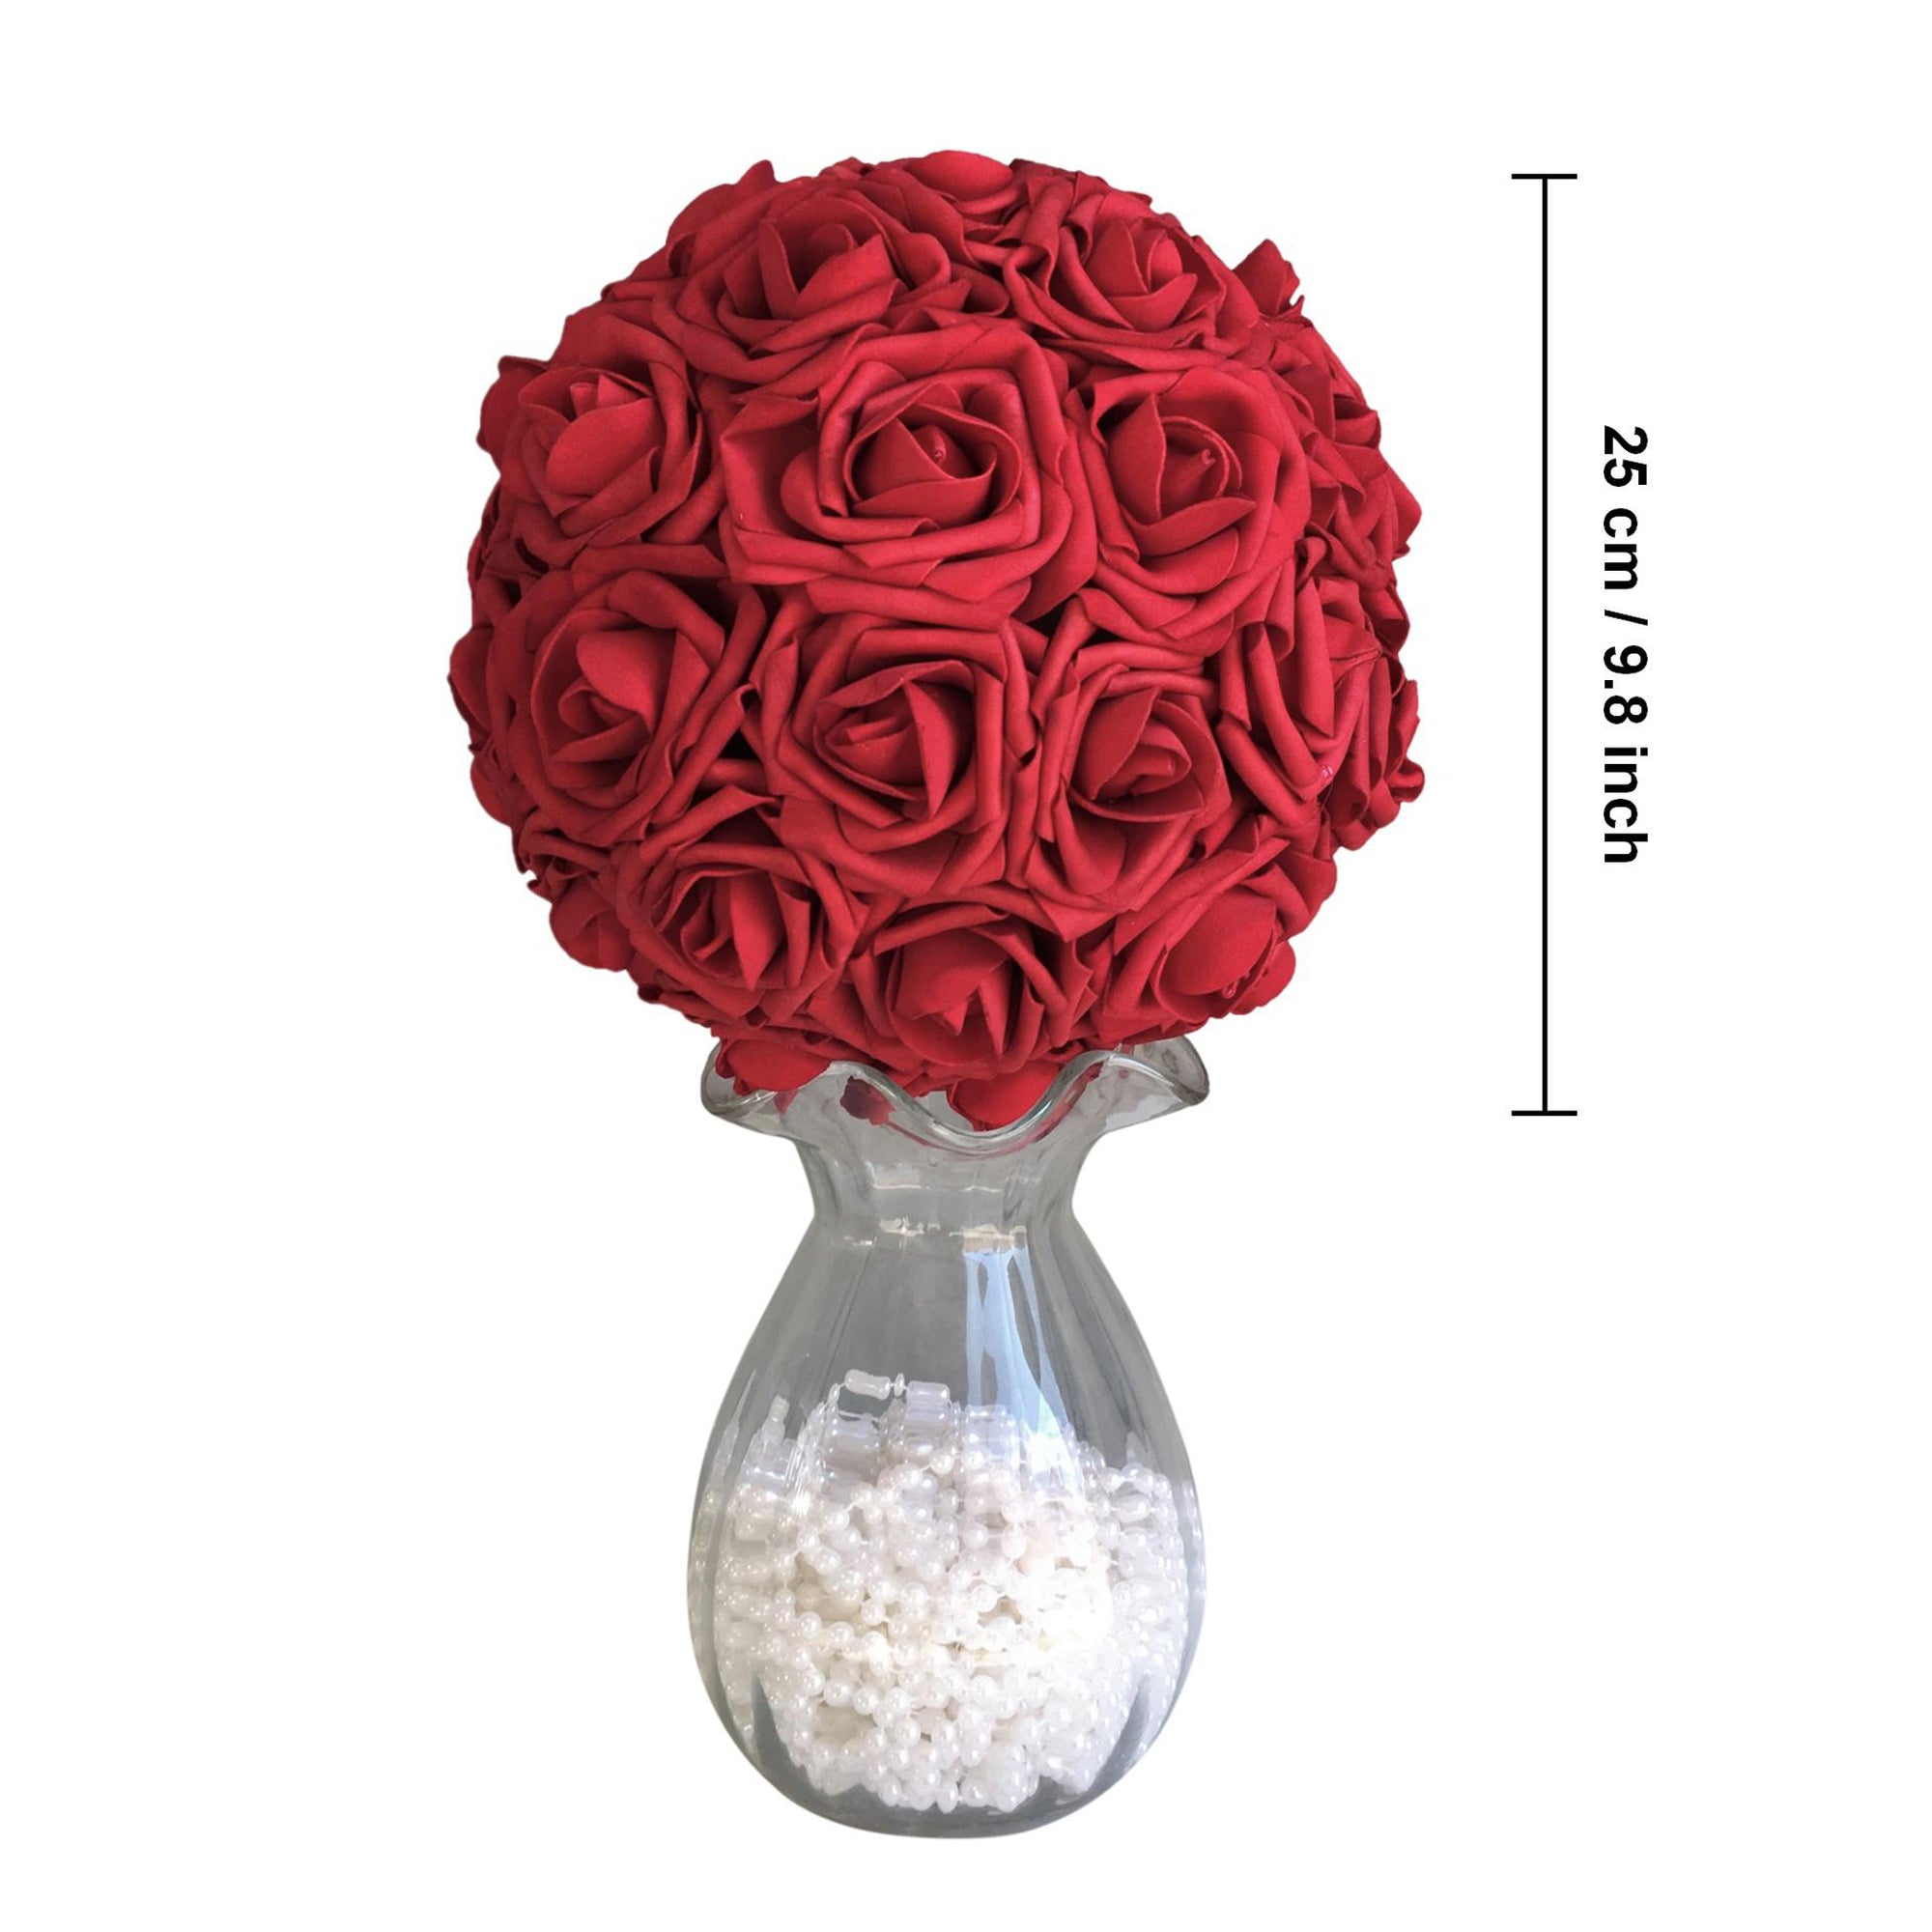 Artificial Flower Balls for Wedding Centerpieces